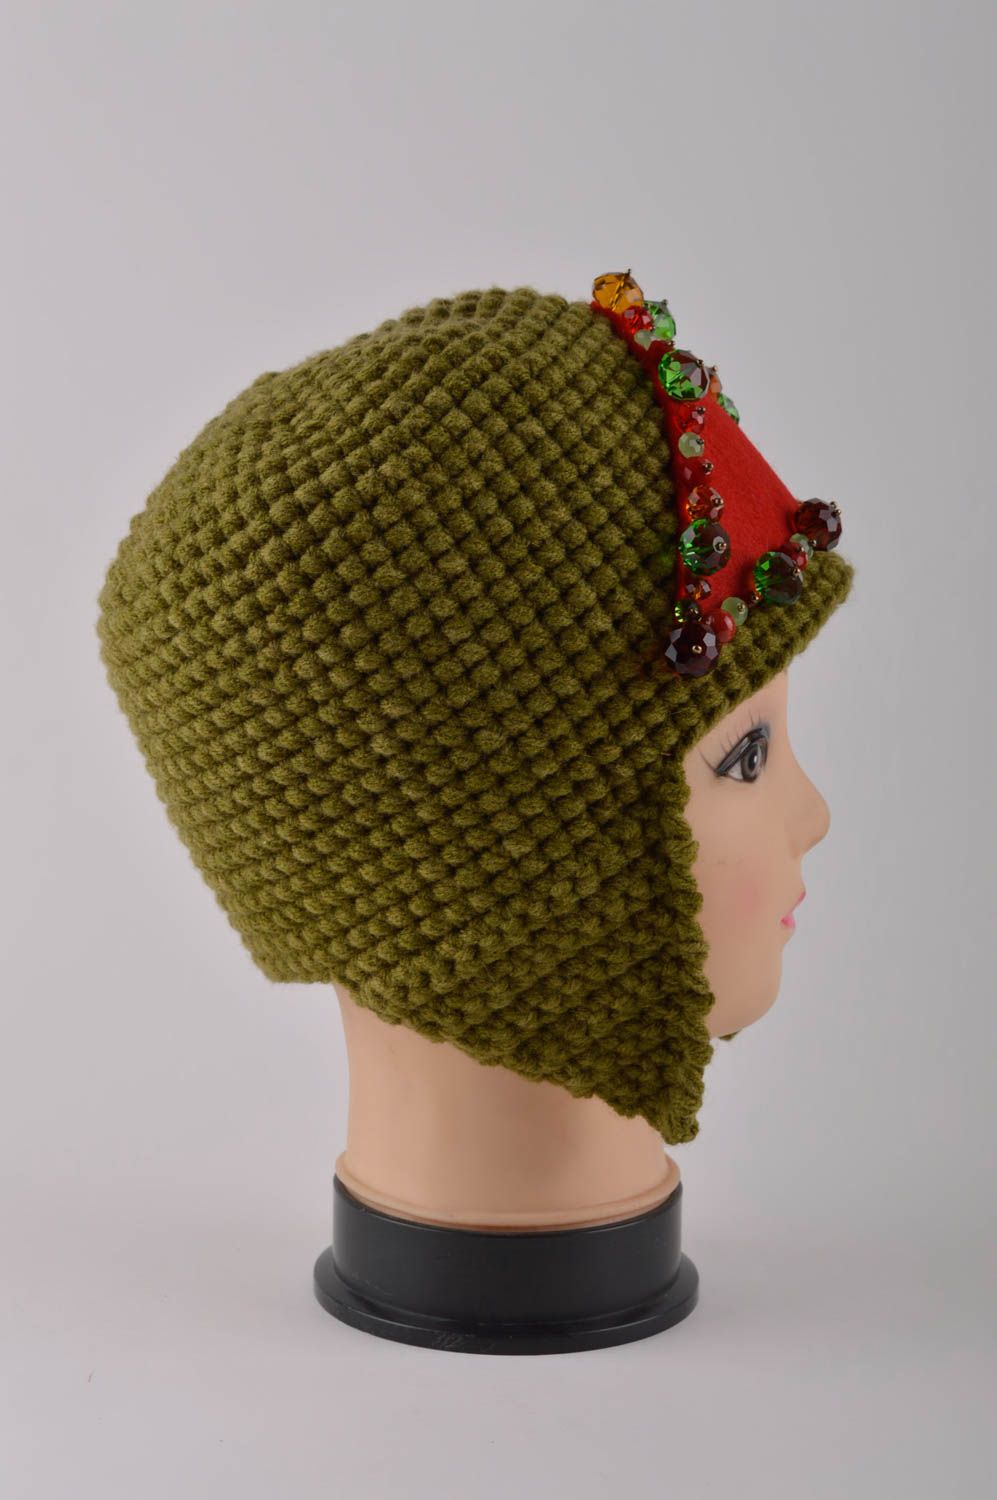 Handmade hat warm baby hat winter hat for baby unusual headwear gift ideas photo 4